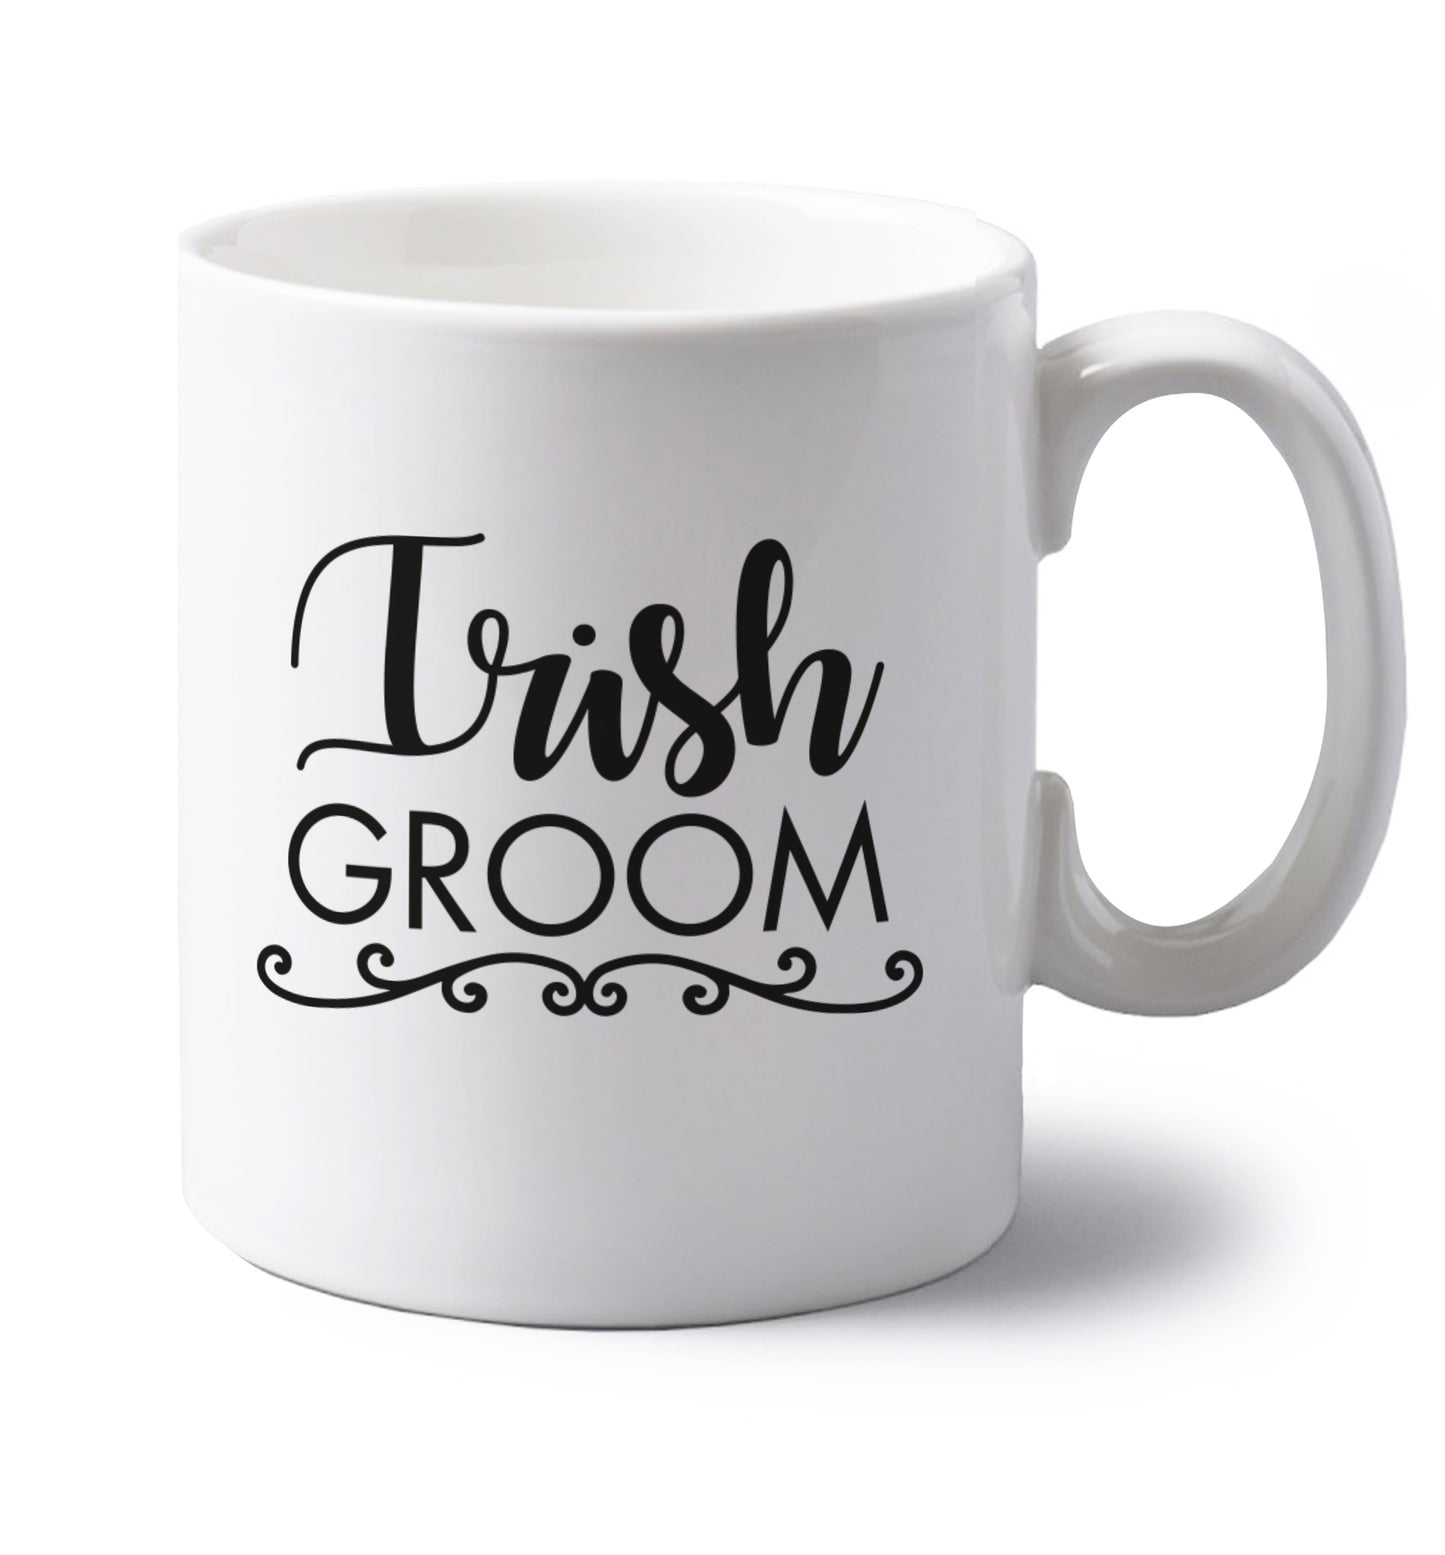 Irish groom left handed white ceramic mug 